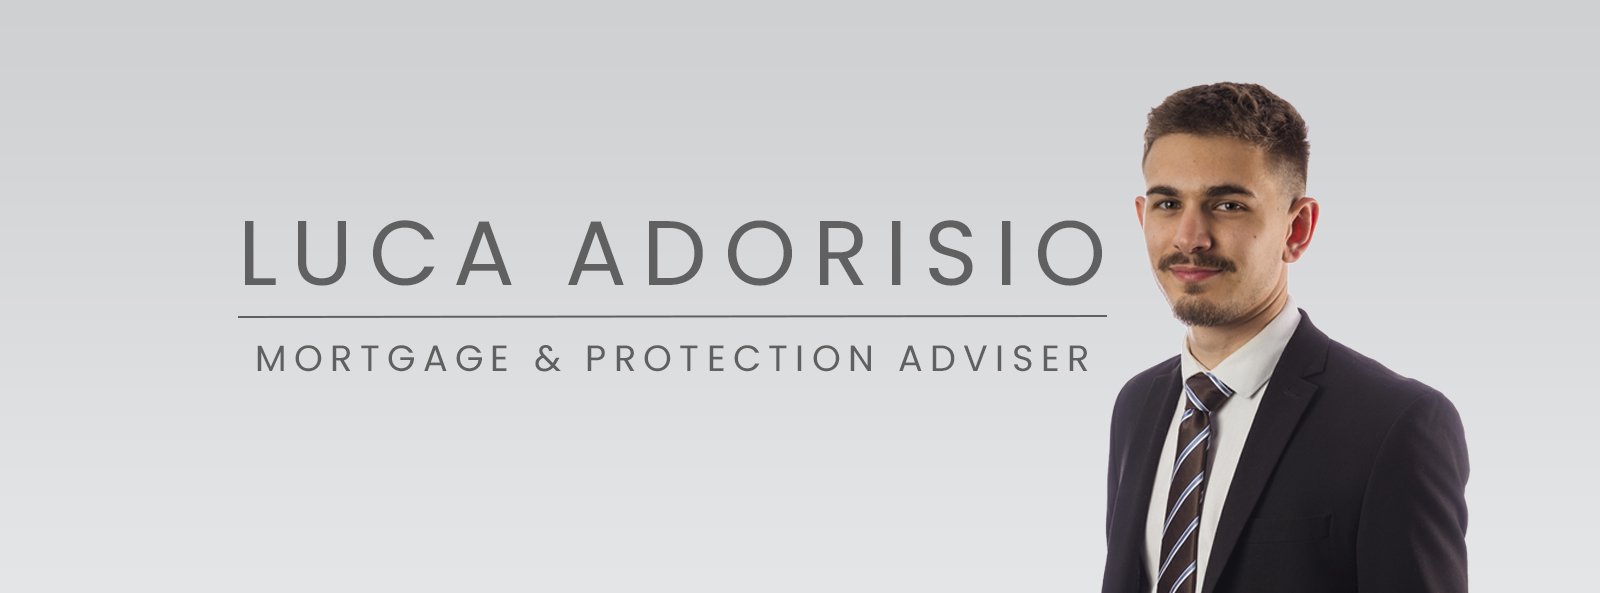 Luca Adorisio - Mortgage & Protection Adviser